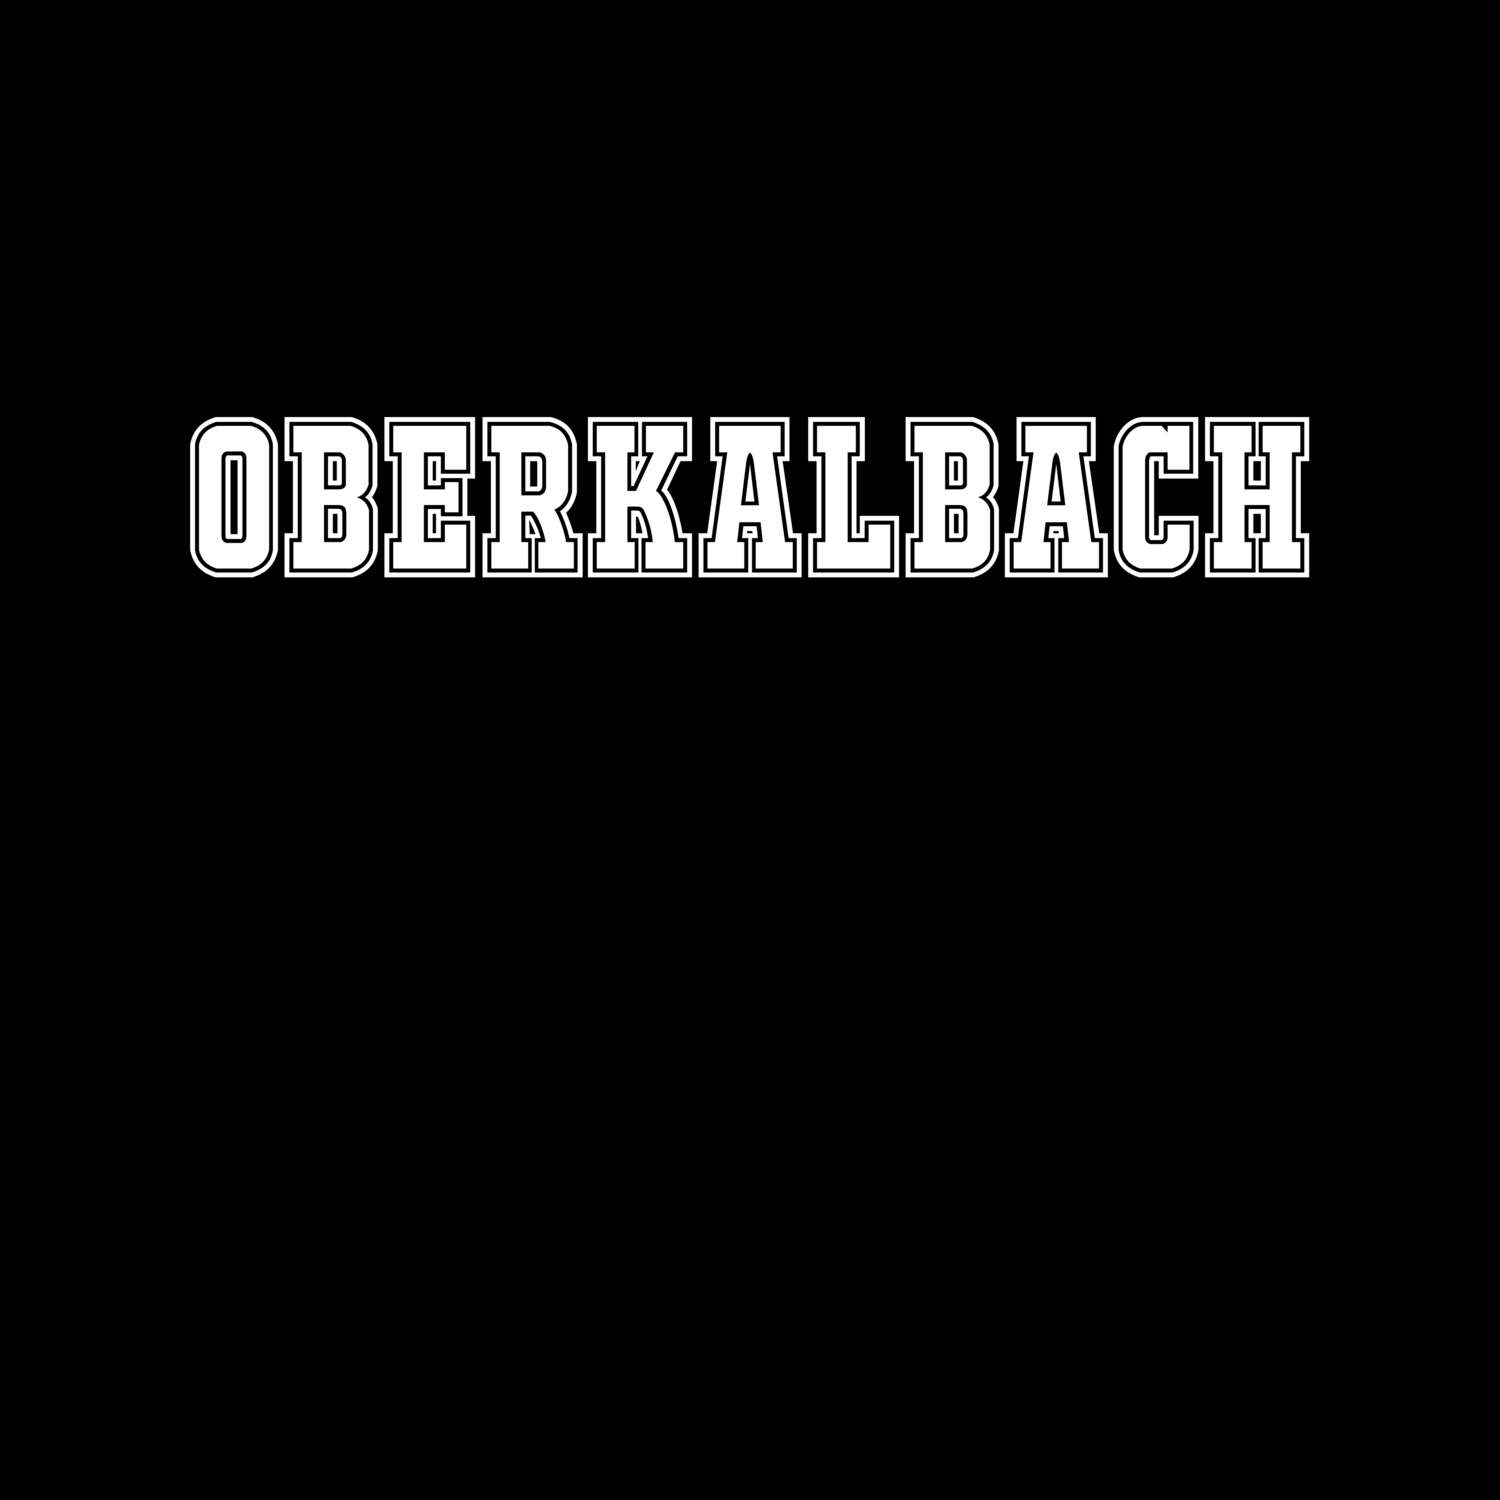 Oberkalbach T-Shirt »Classic«